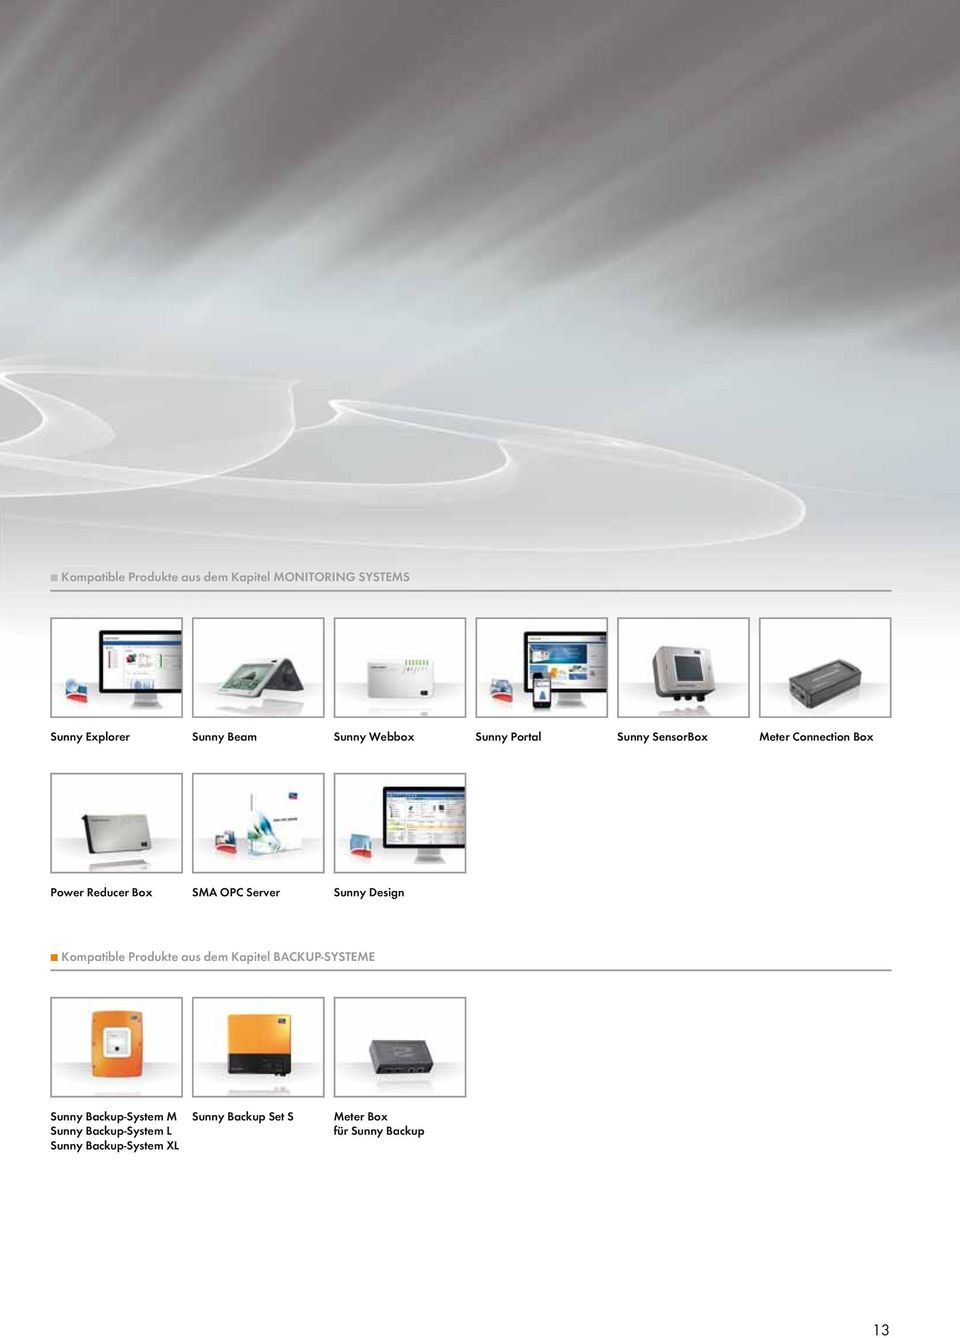 Server Sunny Design Kompatible Produkte aus dem Kapitel BACKUP-SYSTEME Sunny